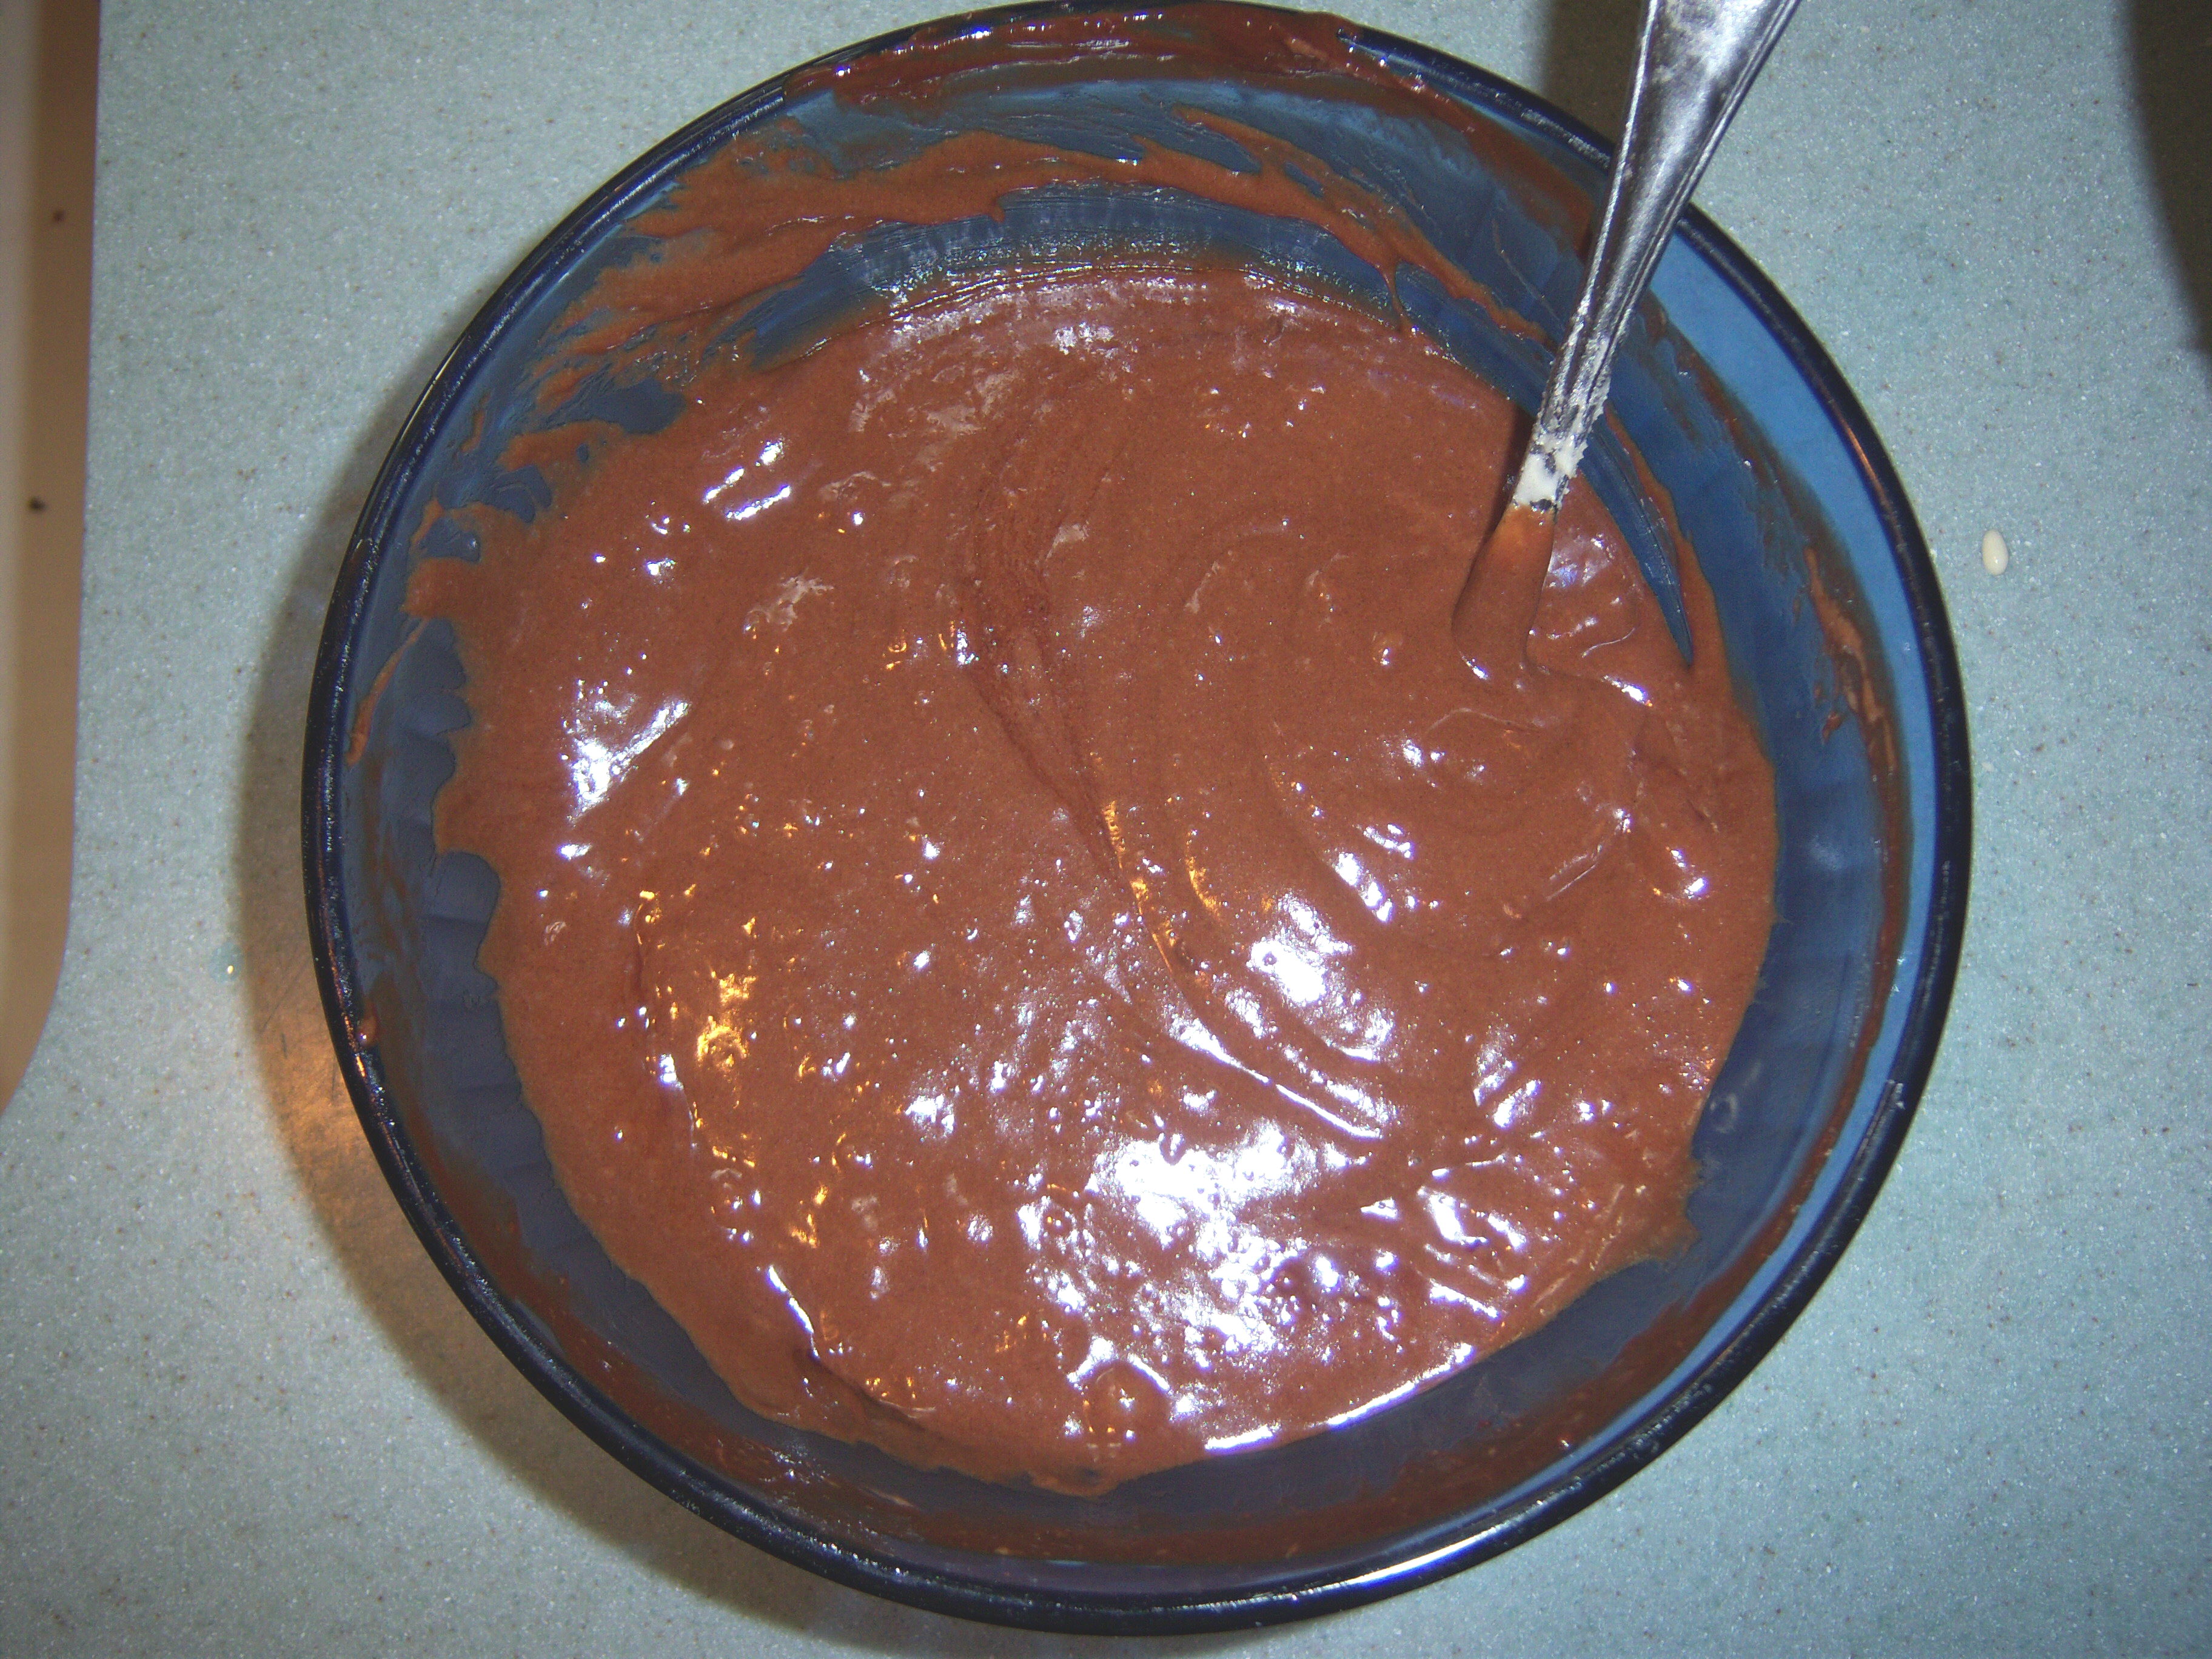 Chocolate batter